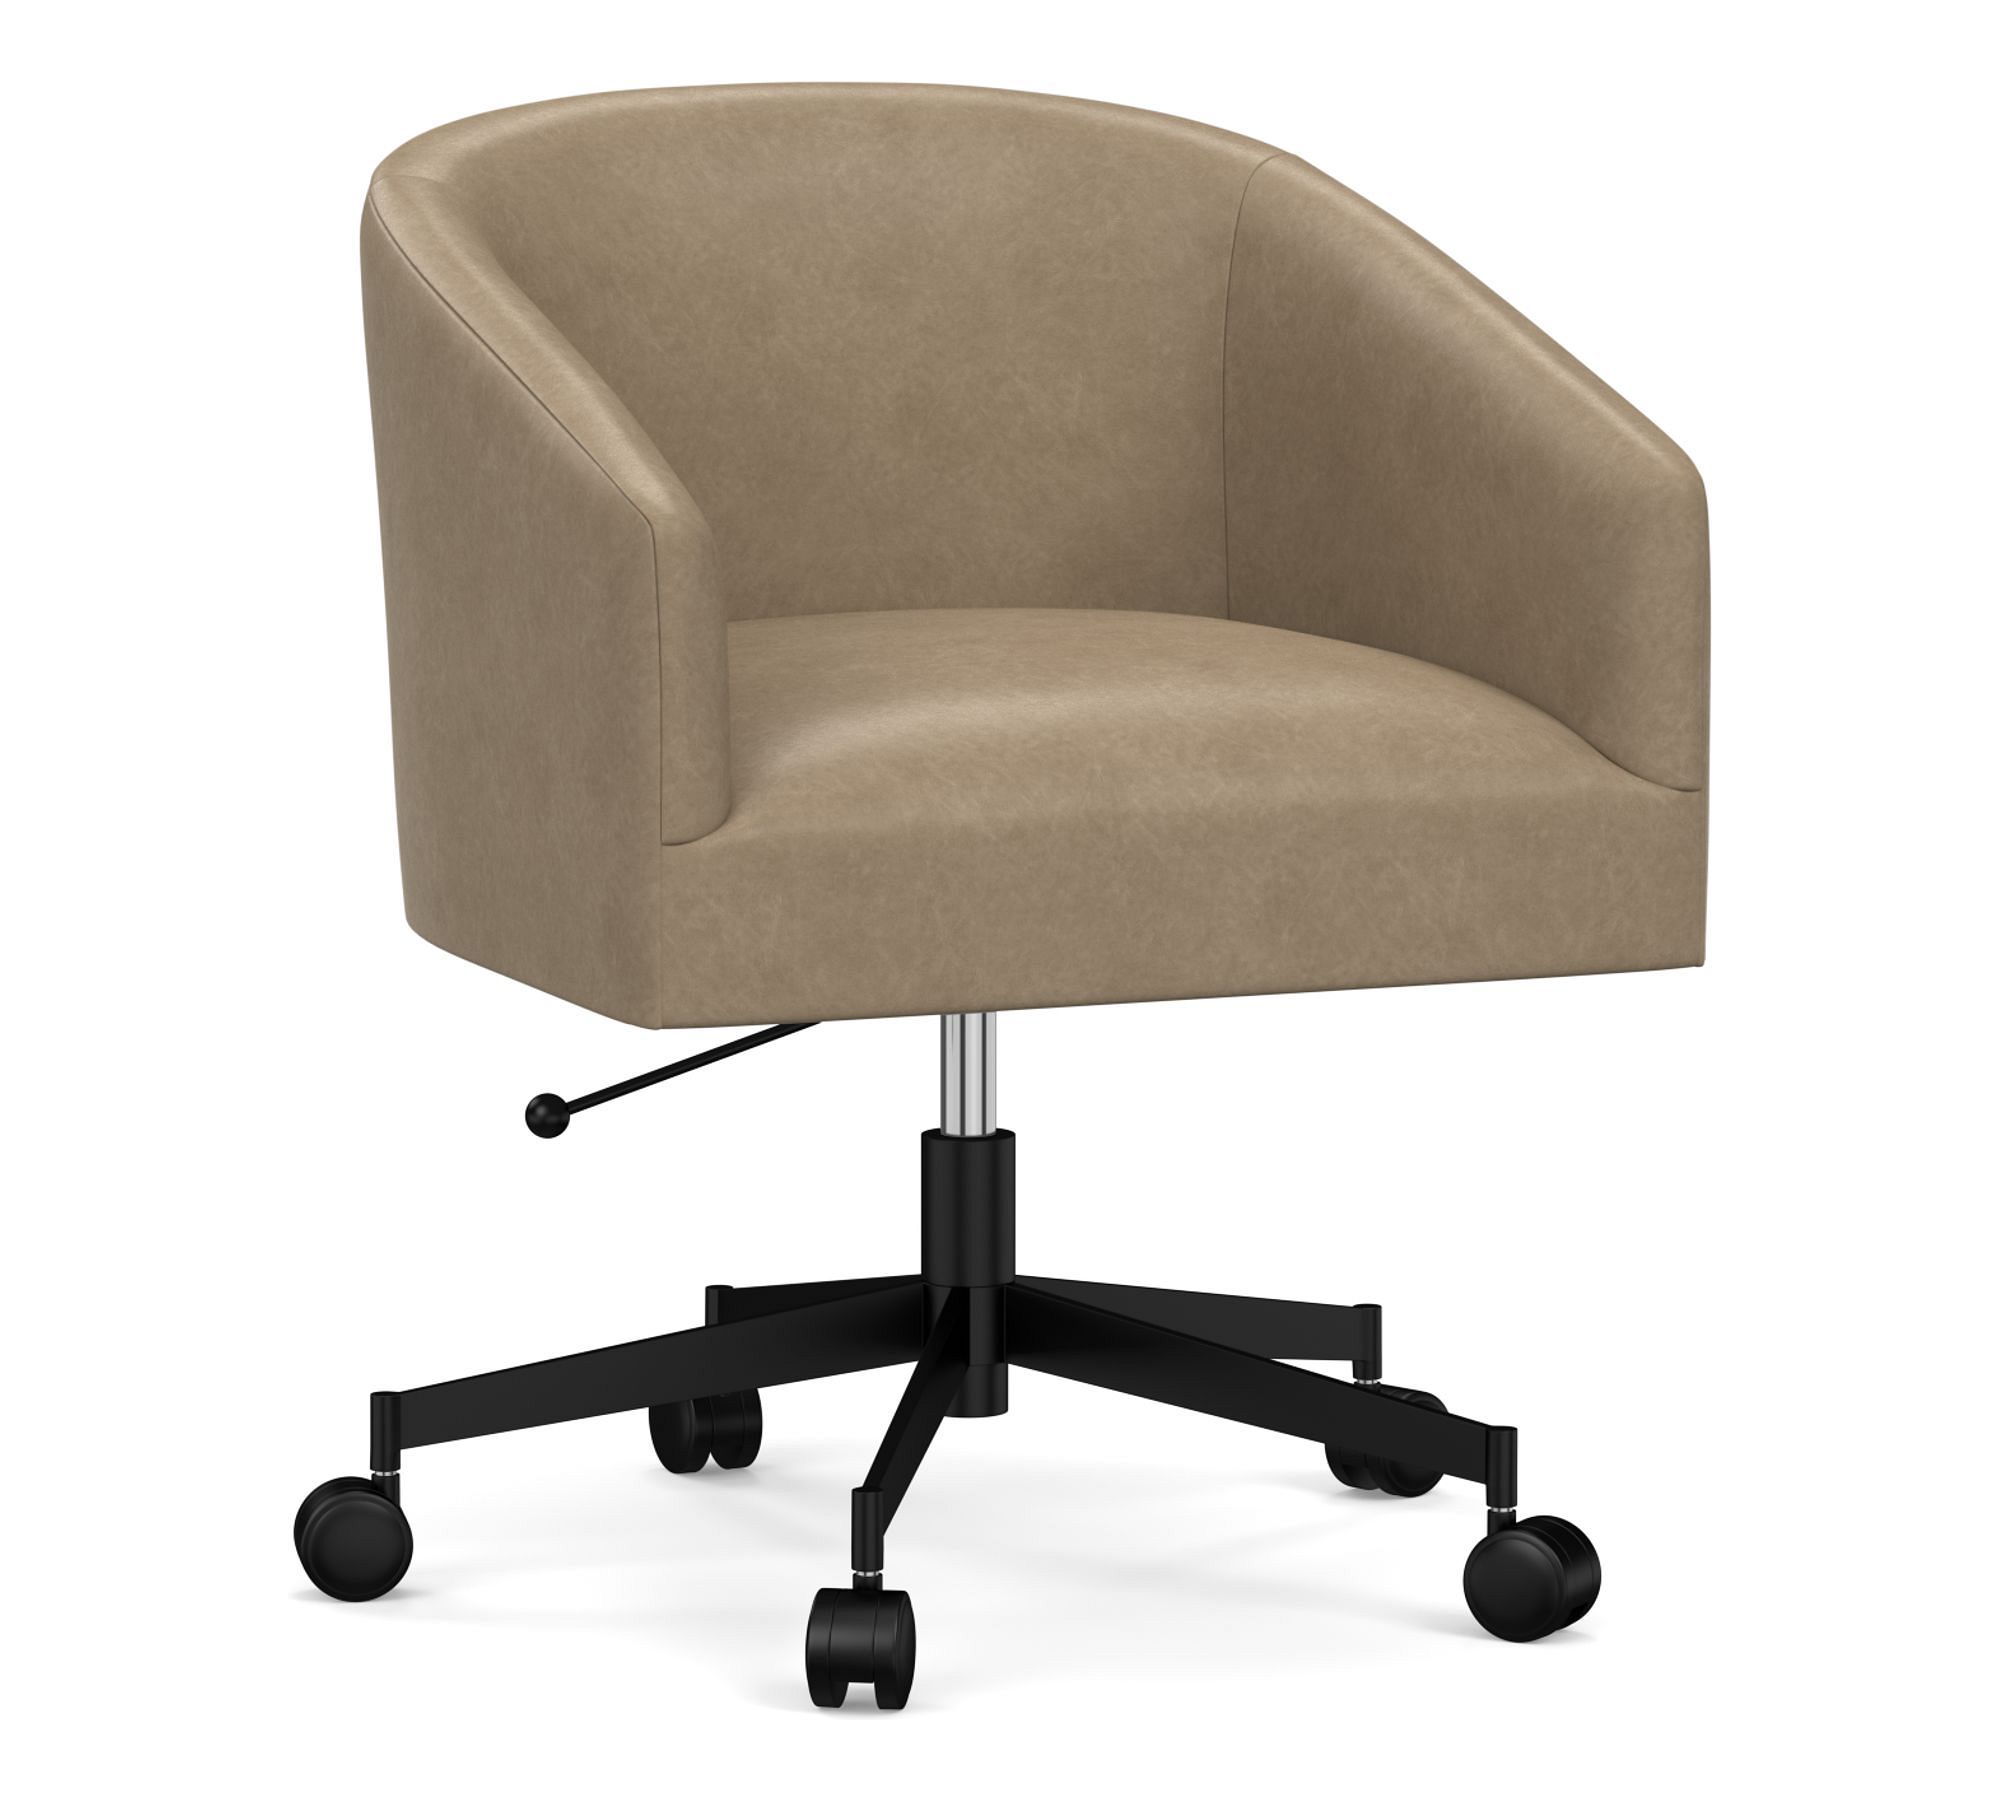 Baldwin Leather Swivel Desk Chair